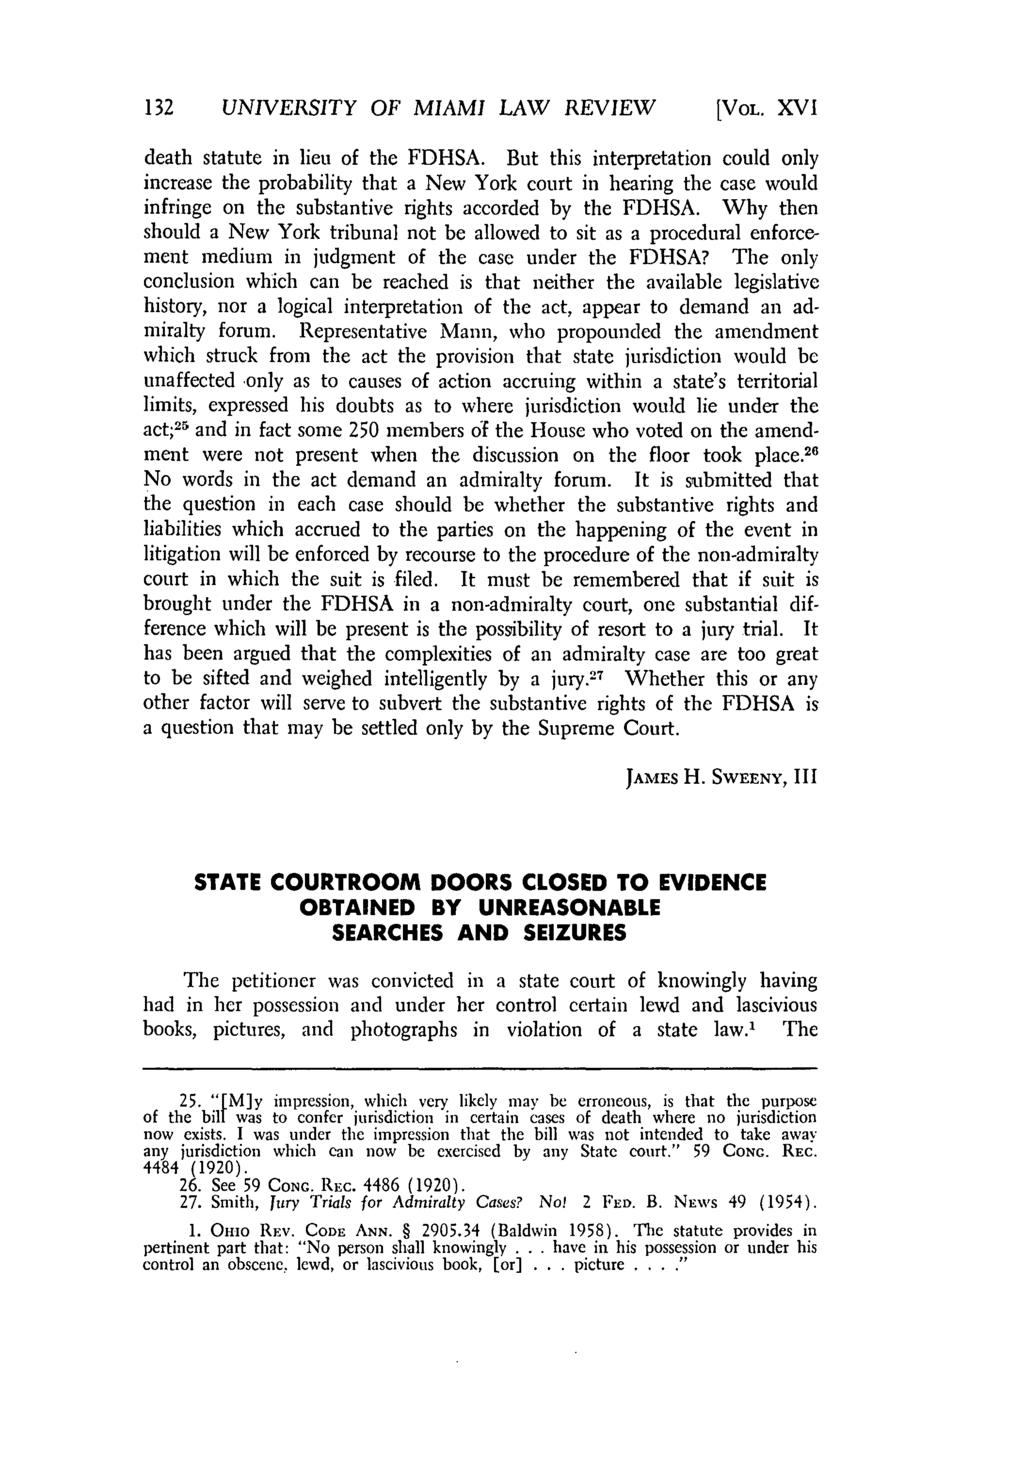 132 UNIVERSITY OF MIAMI LAW REVIEW [VOL. XVI death statute in lieu of the FDHSA.